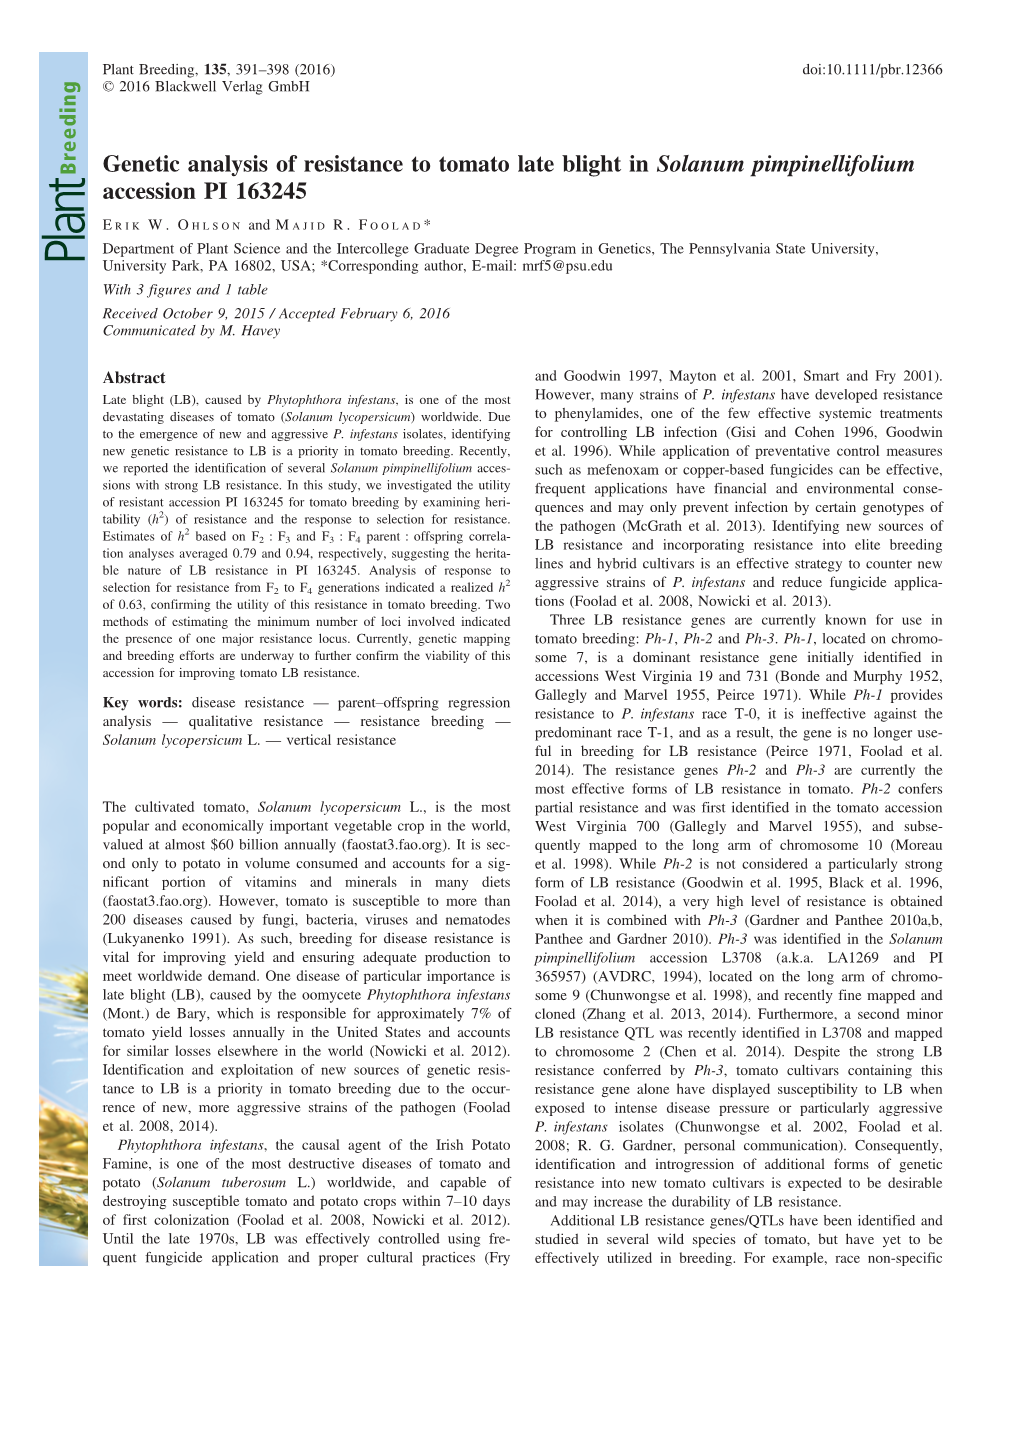 Genetic Analysis of Resistance to Tomato Late Blight in Solanum Pimpinellifolium Accession PI 163245